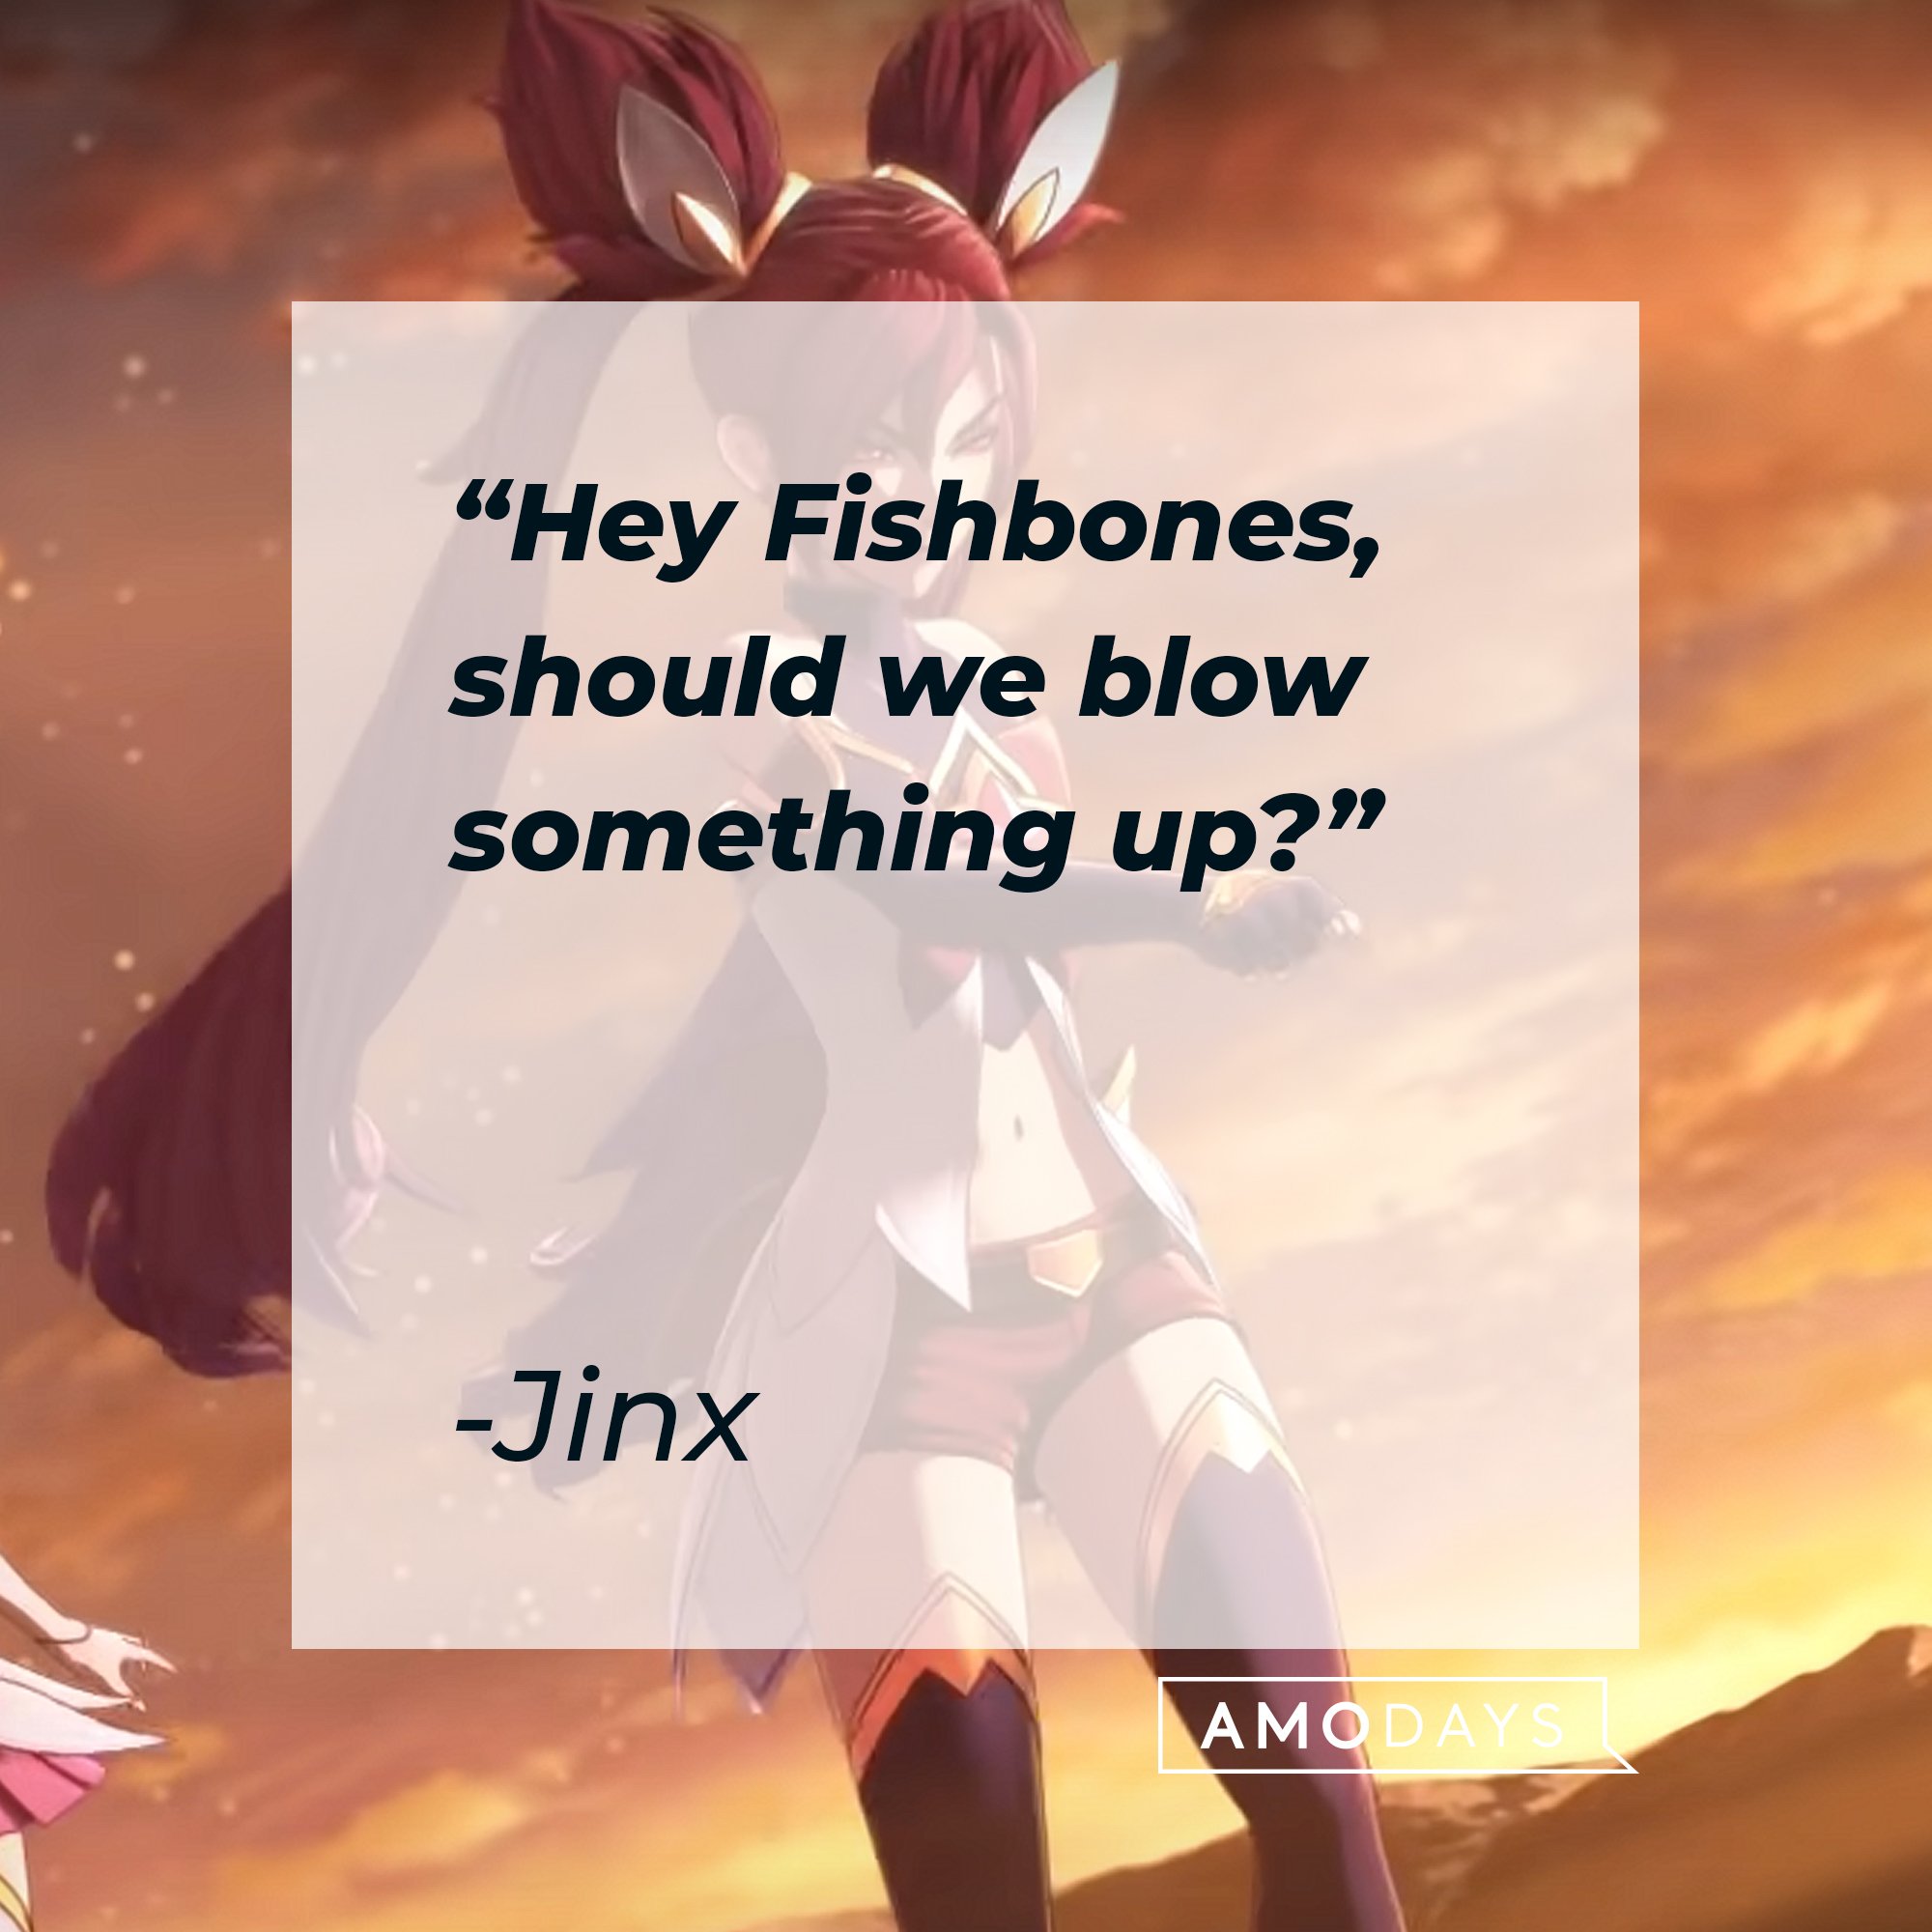 JiInx's quote: "Hey Fishbones, should we blow something up?" | Image: AmoDays